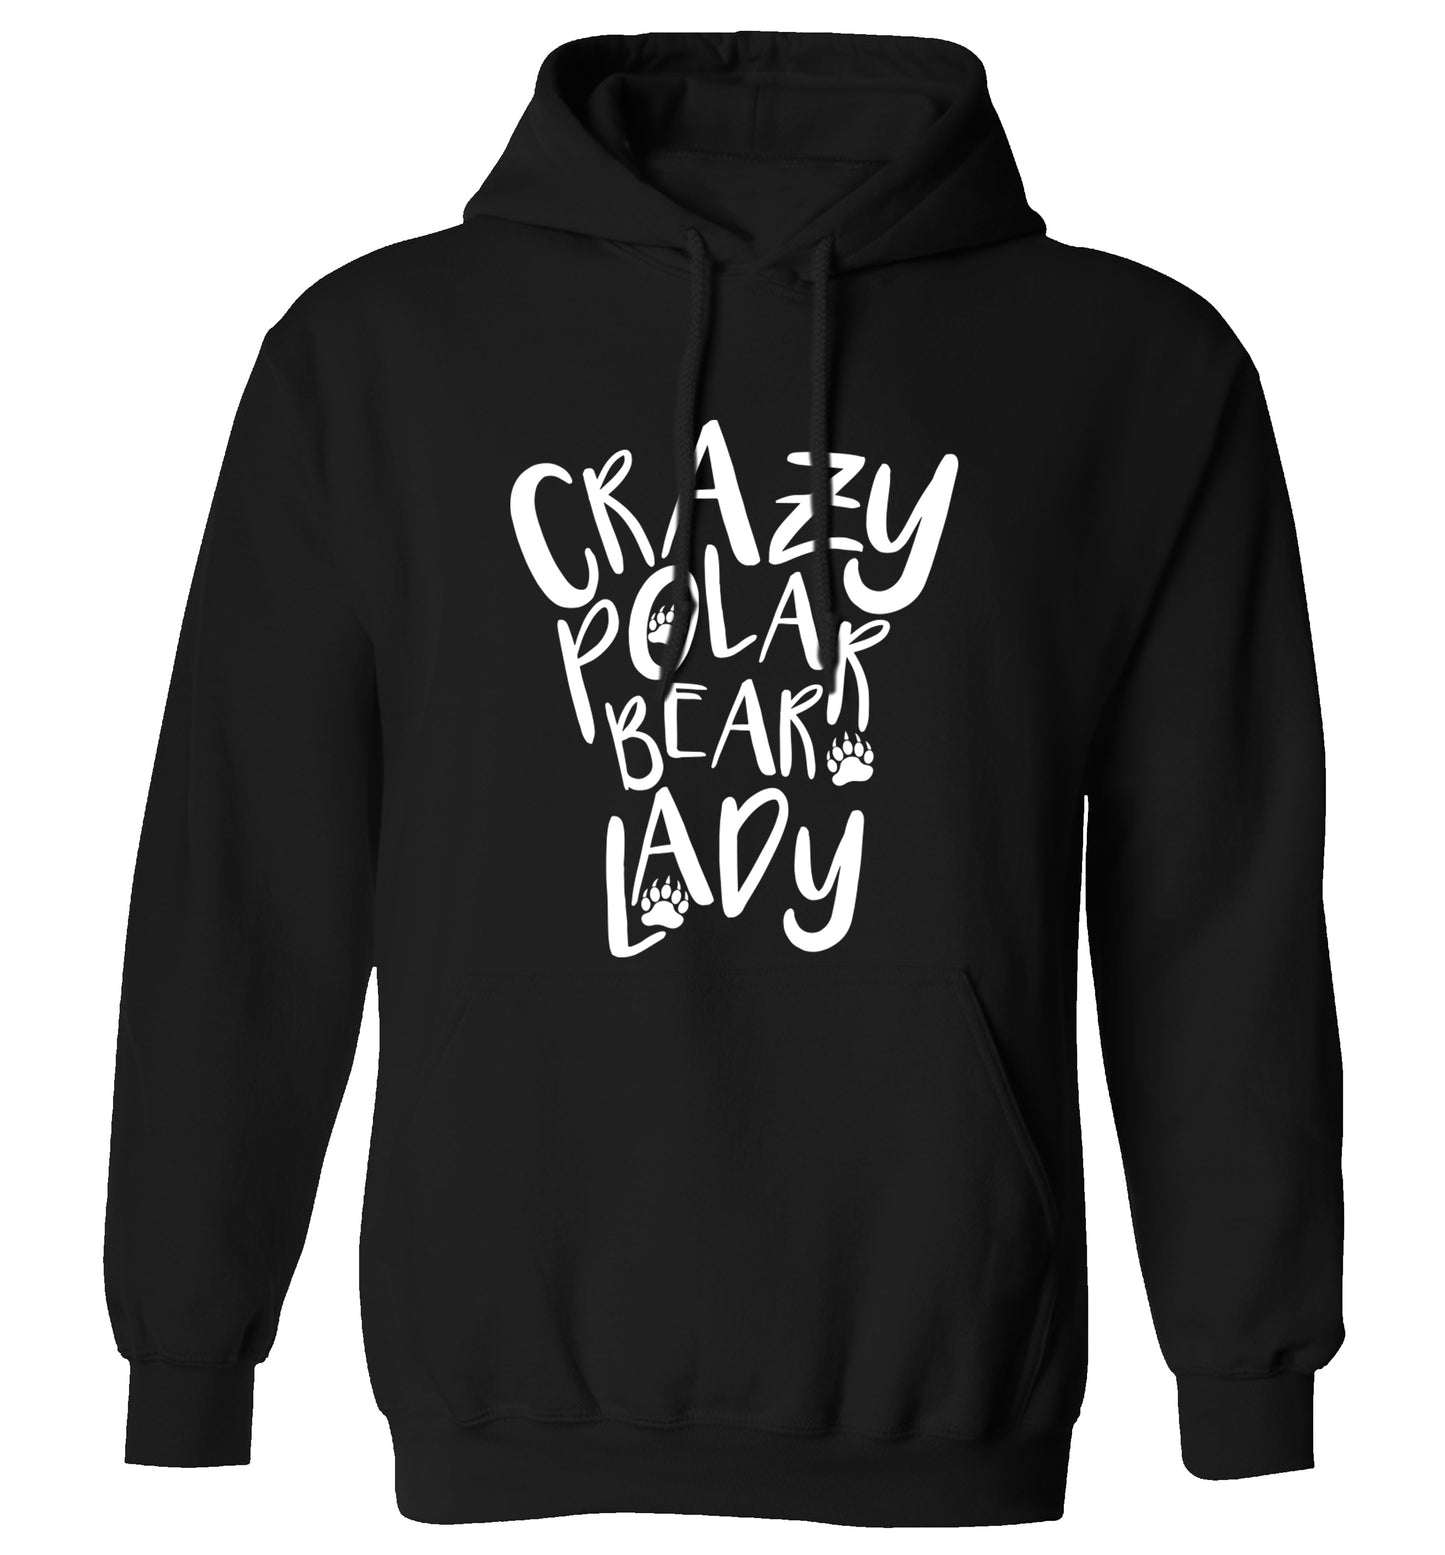 Crazy polar bear lady adults unisex black hoodie 2XL